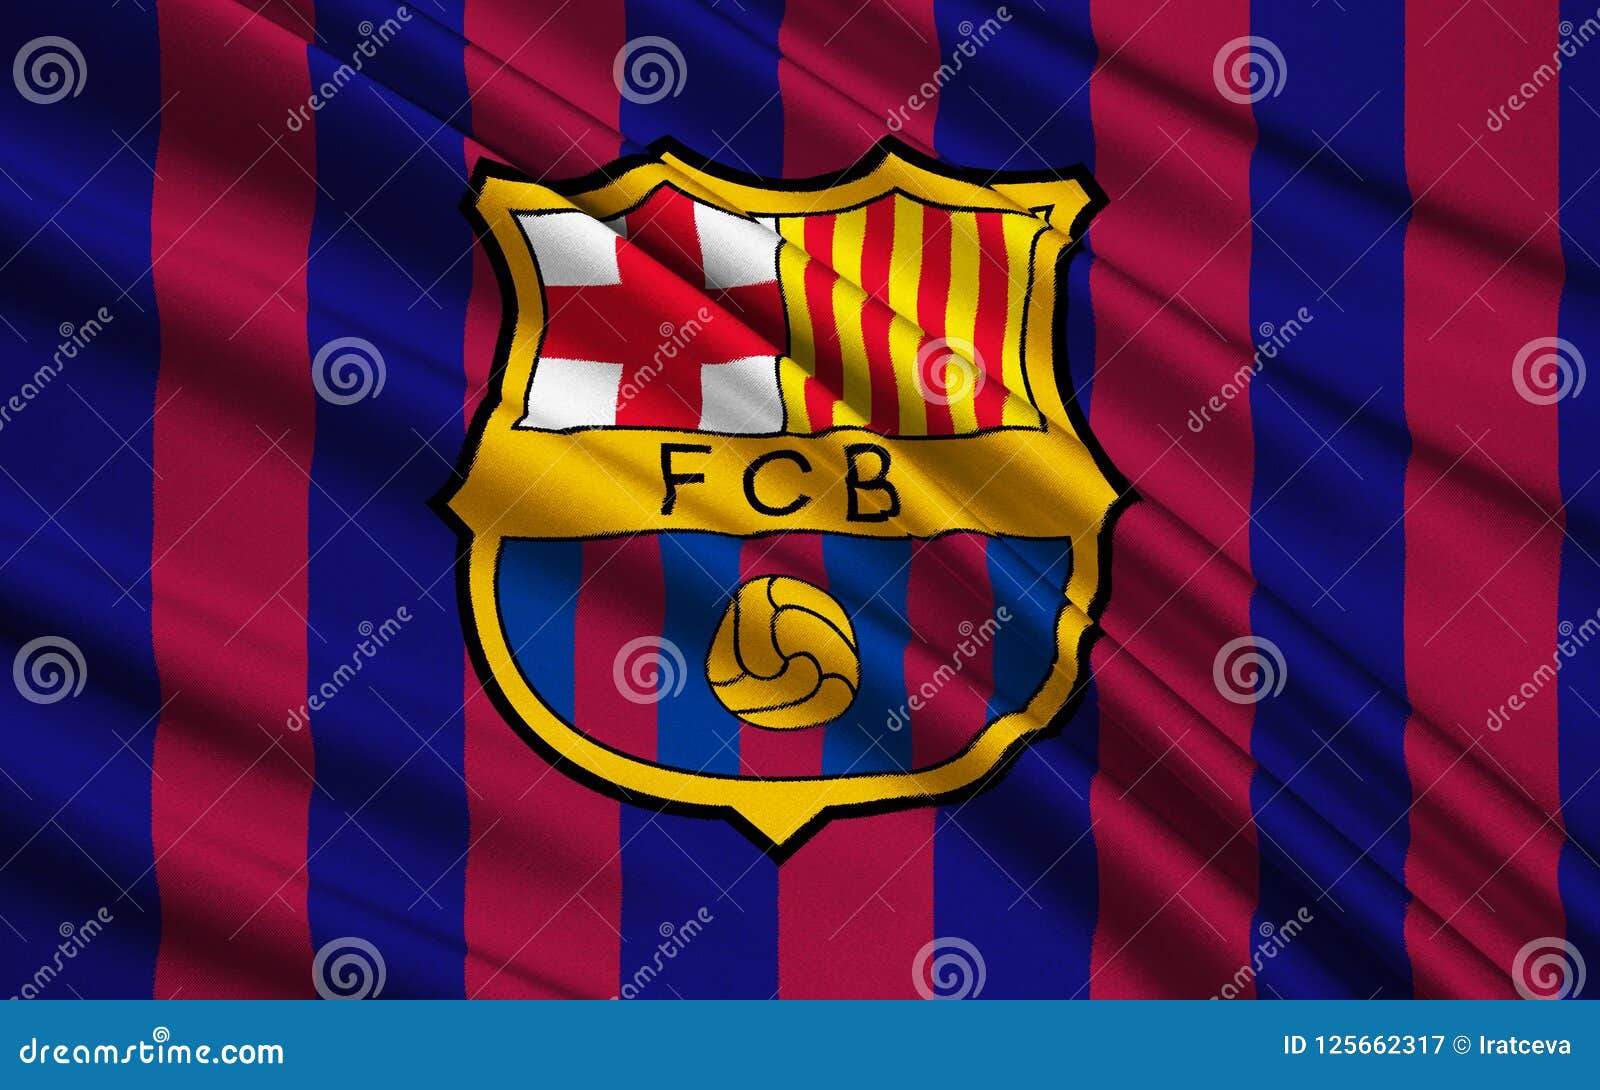 Картинки футбольного клуба барселона флаги